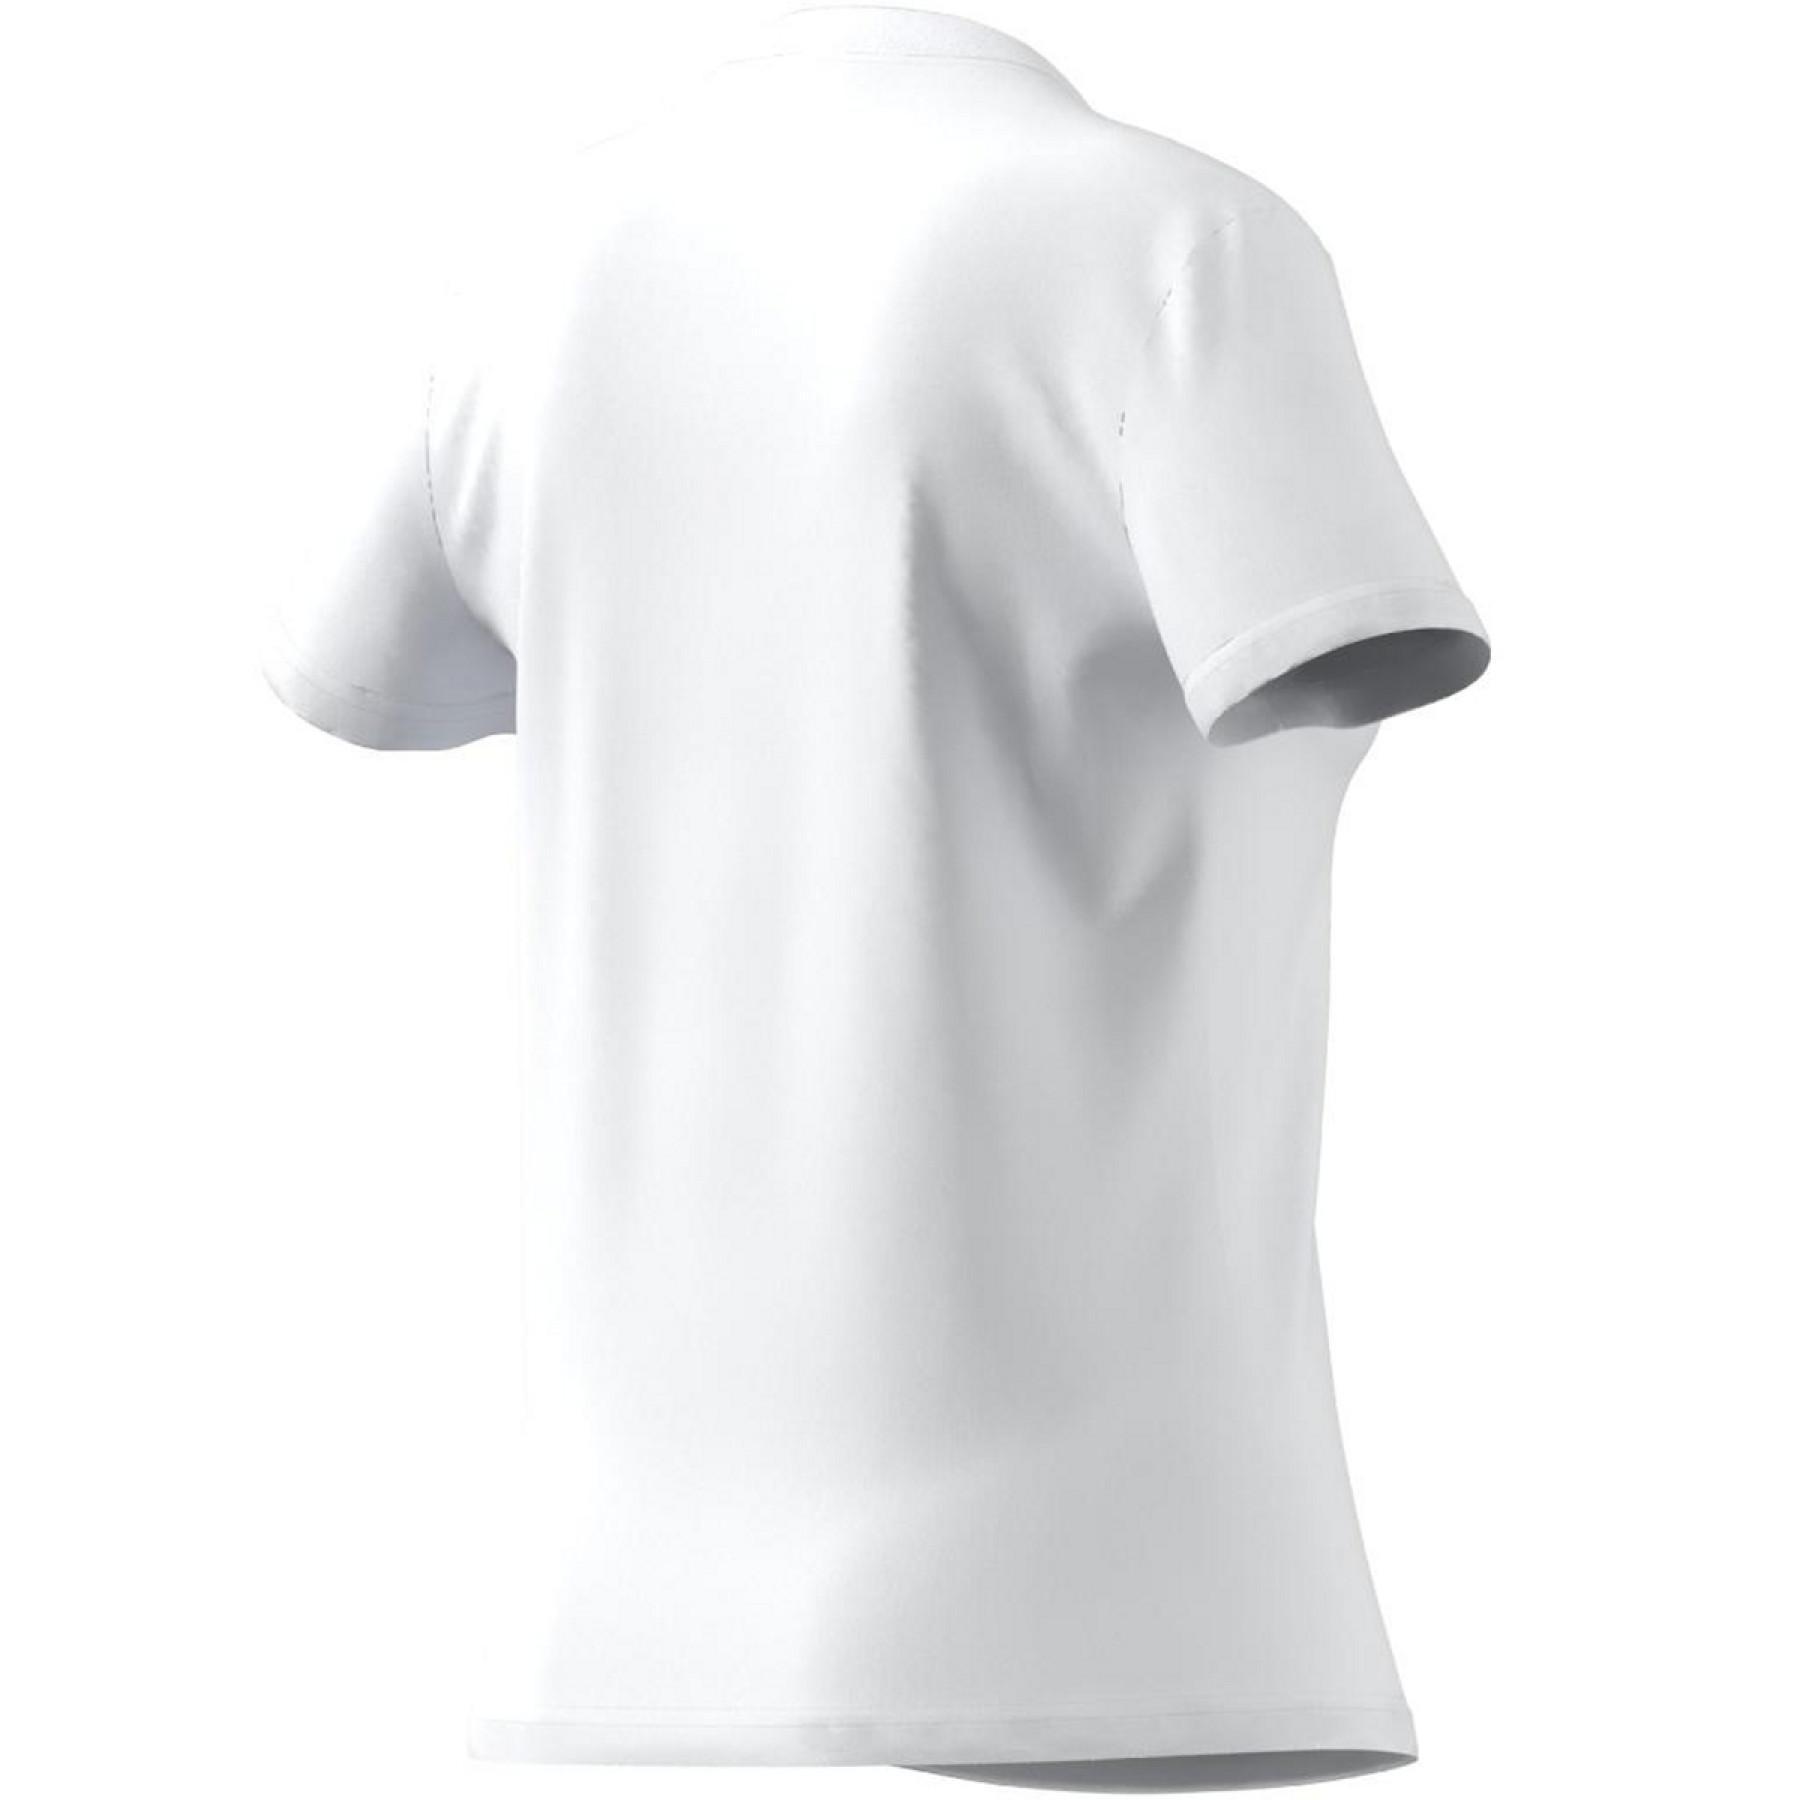 Frauen-T-Shirt adidas Essentials Slim Logo